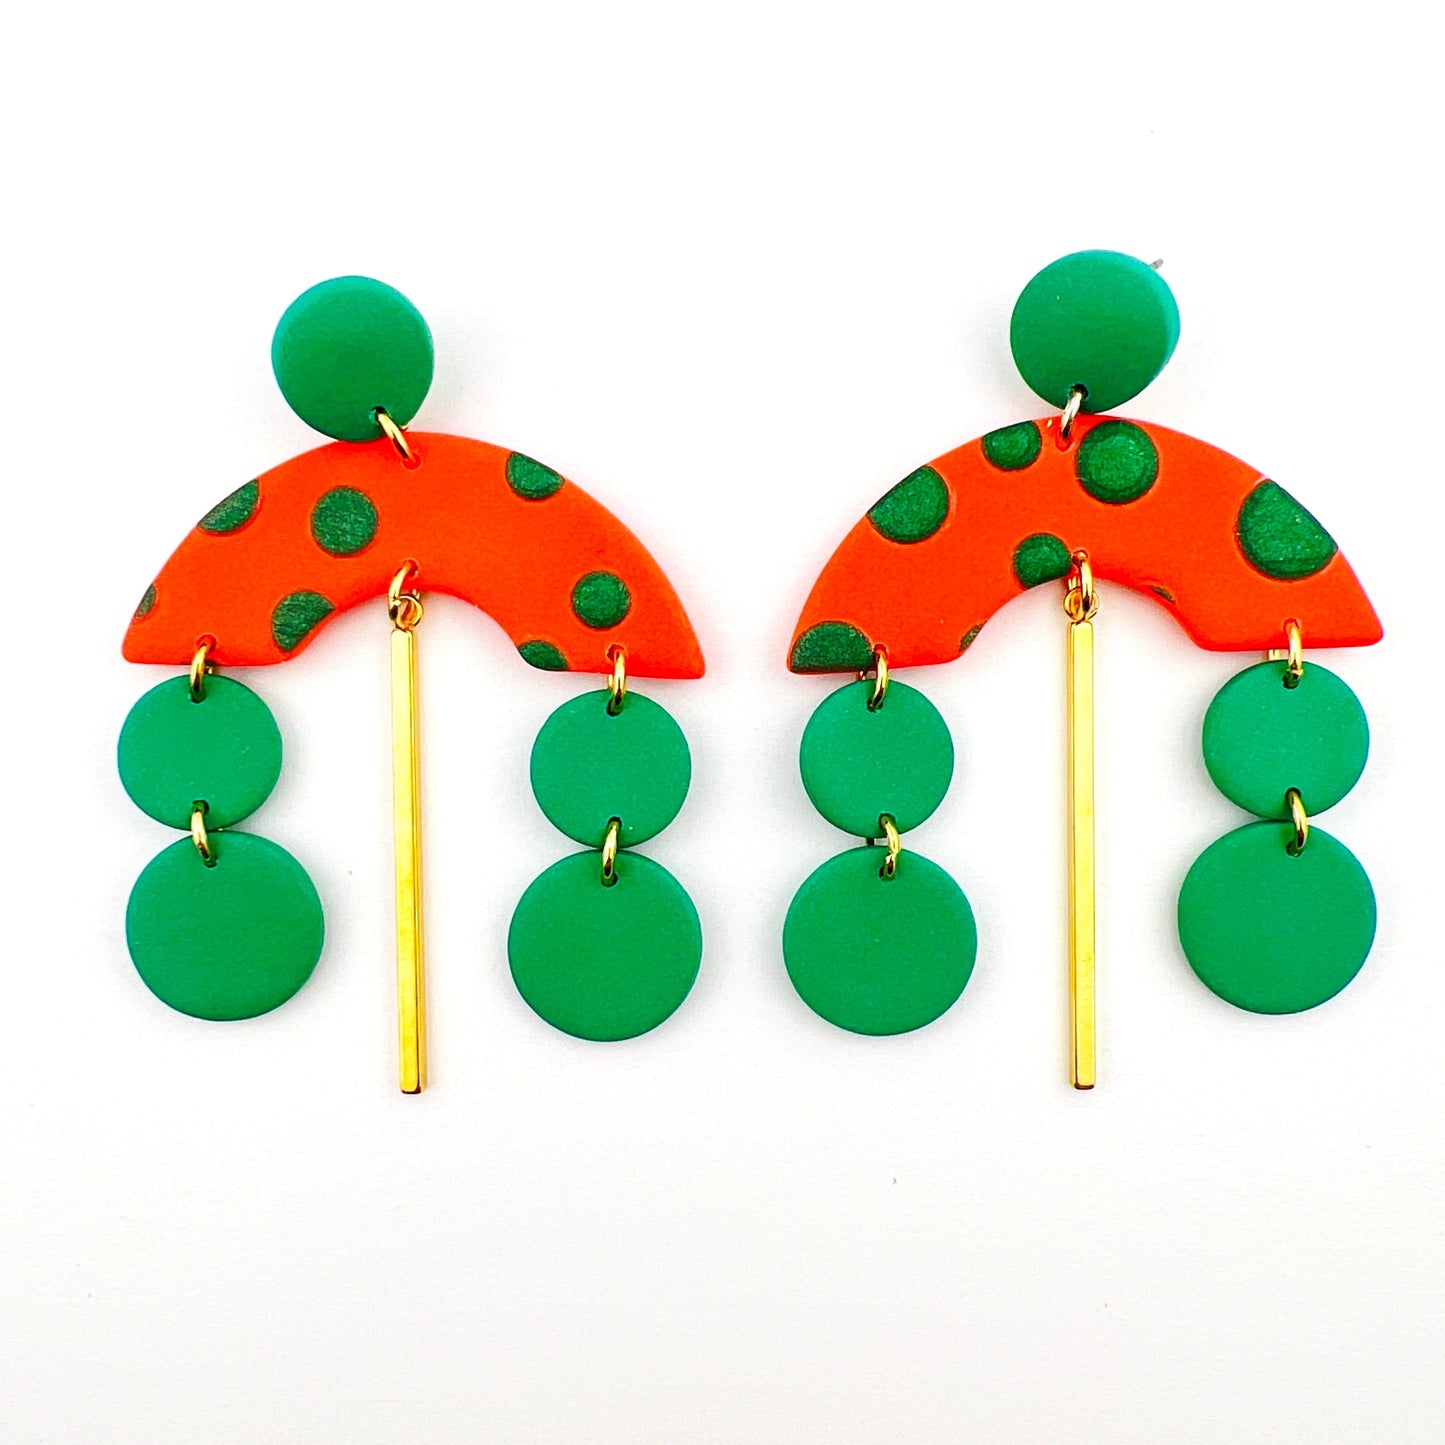 Earrings Orange Arches with Green Polka Dots - Earrings